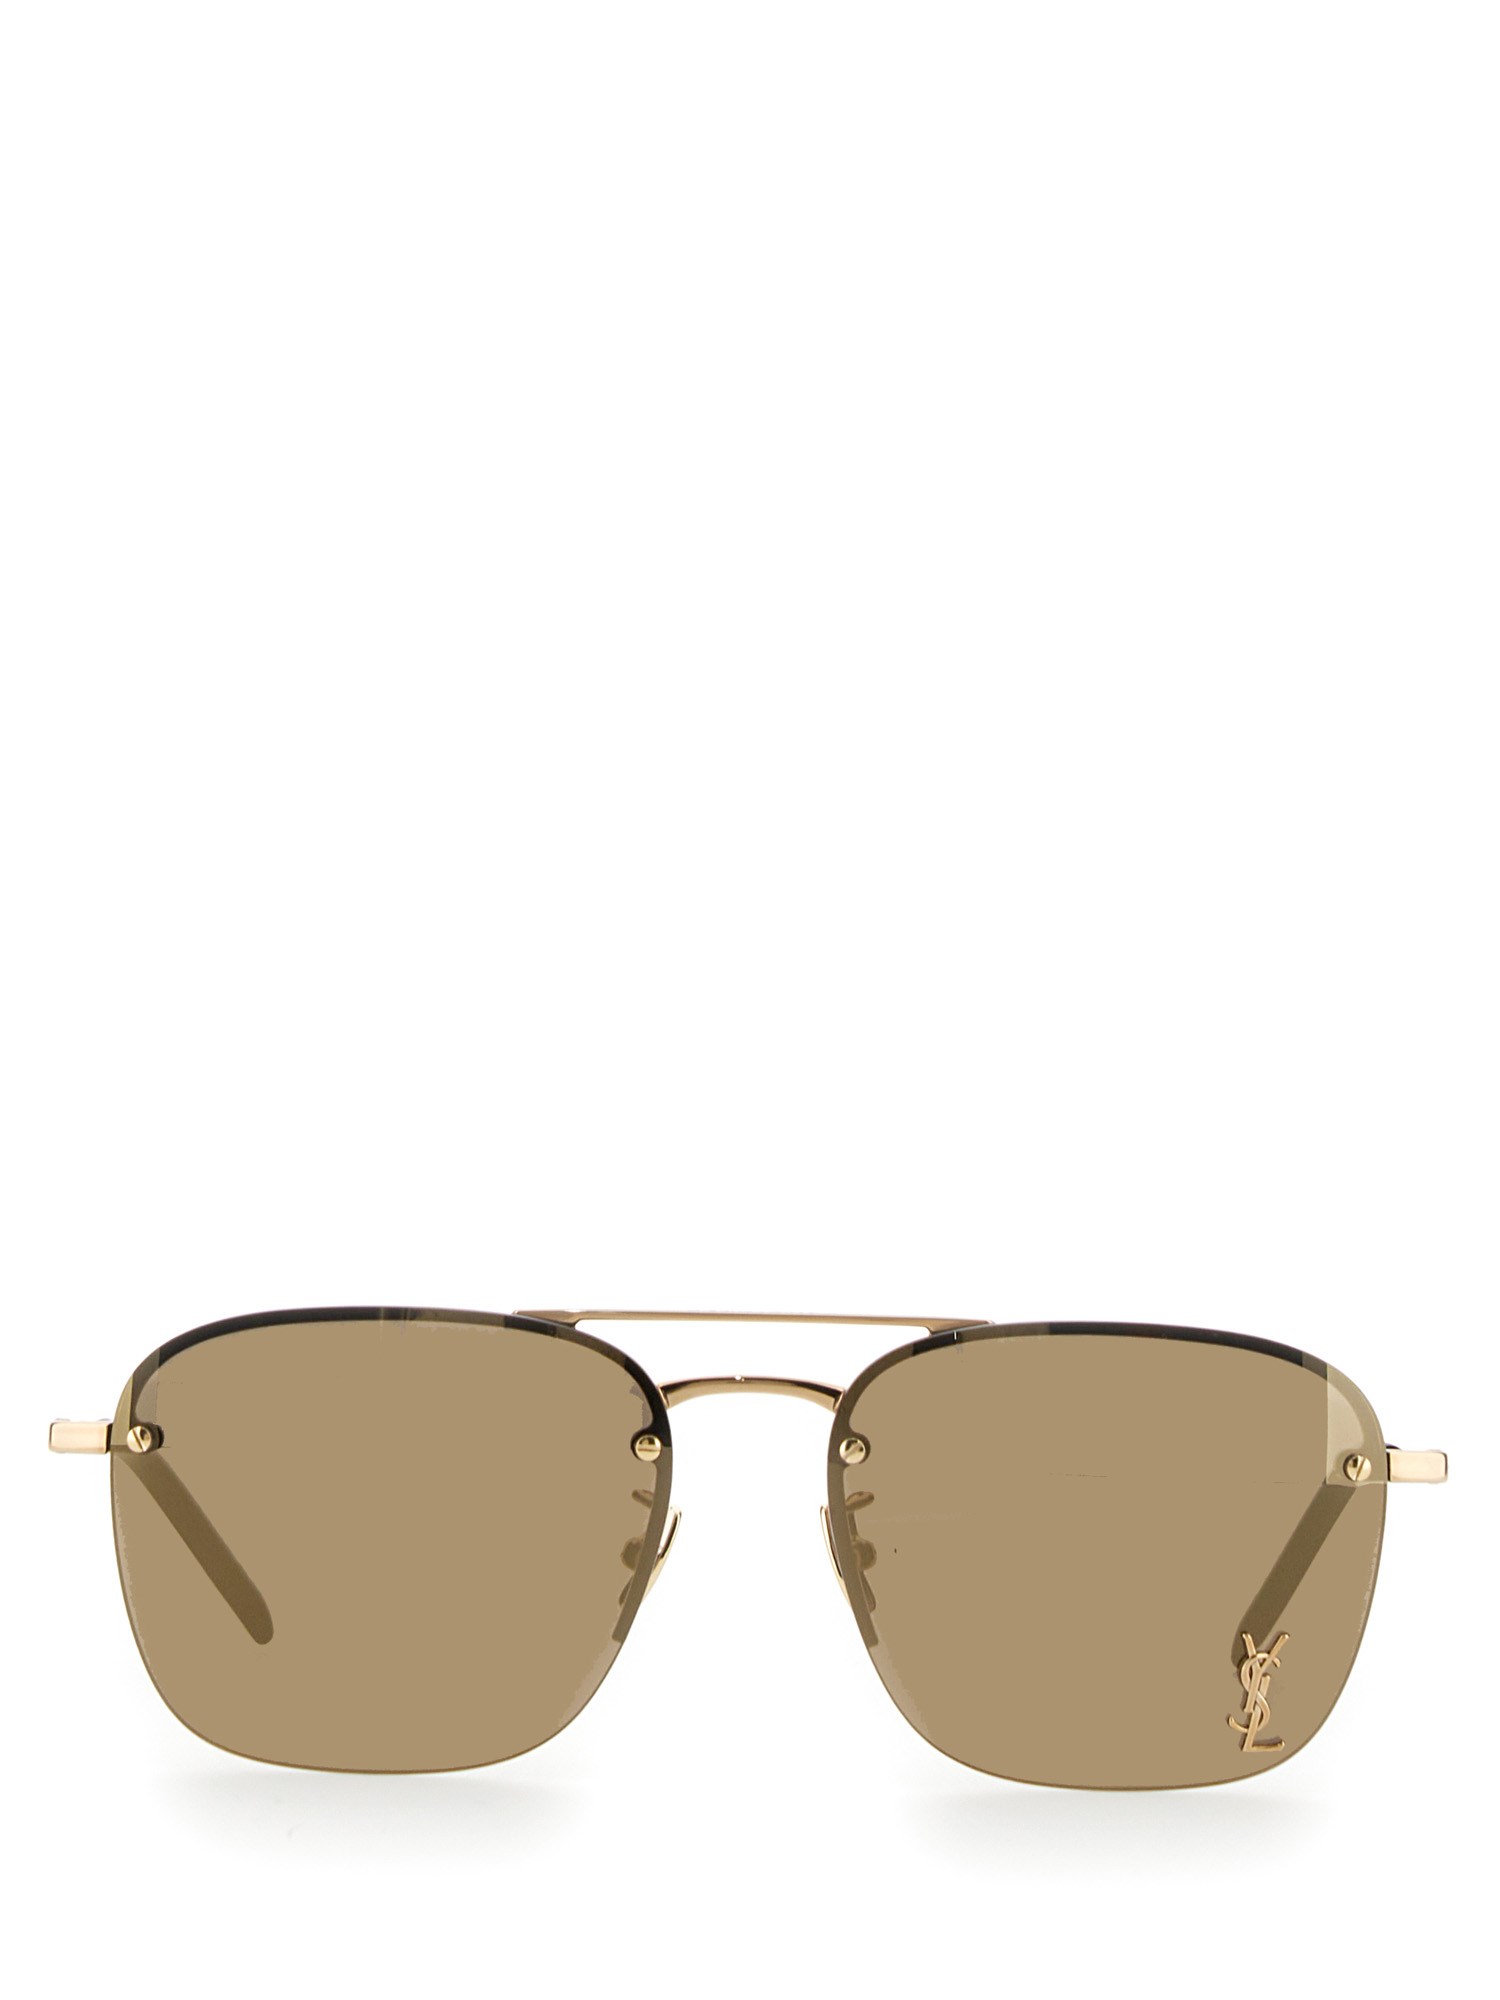 Saint Laurent Sunglasses Sl 309 M In Brown